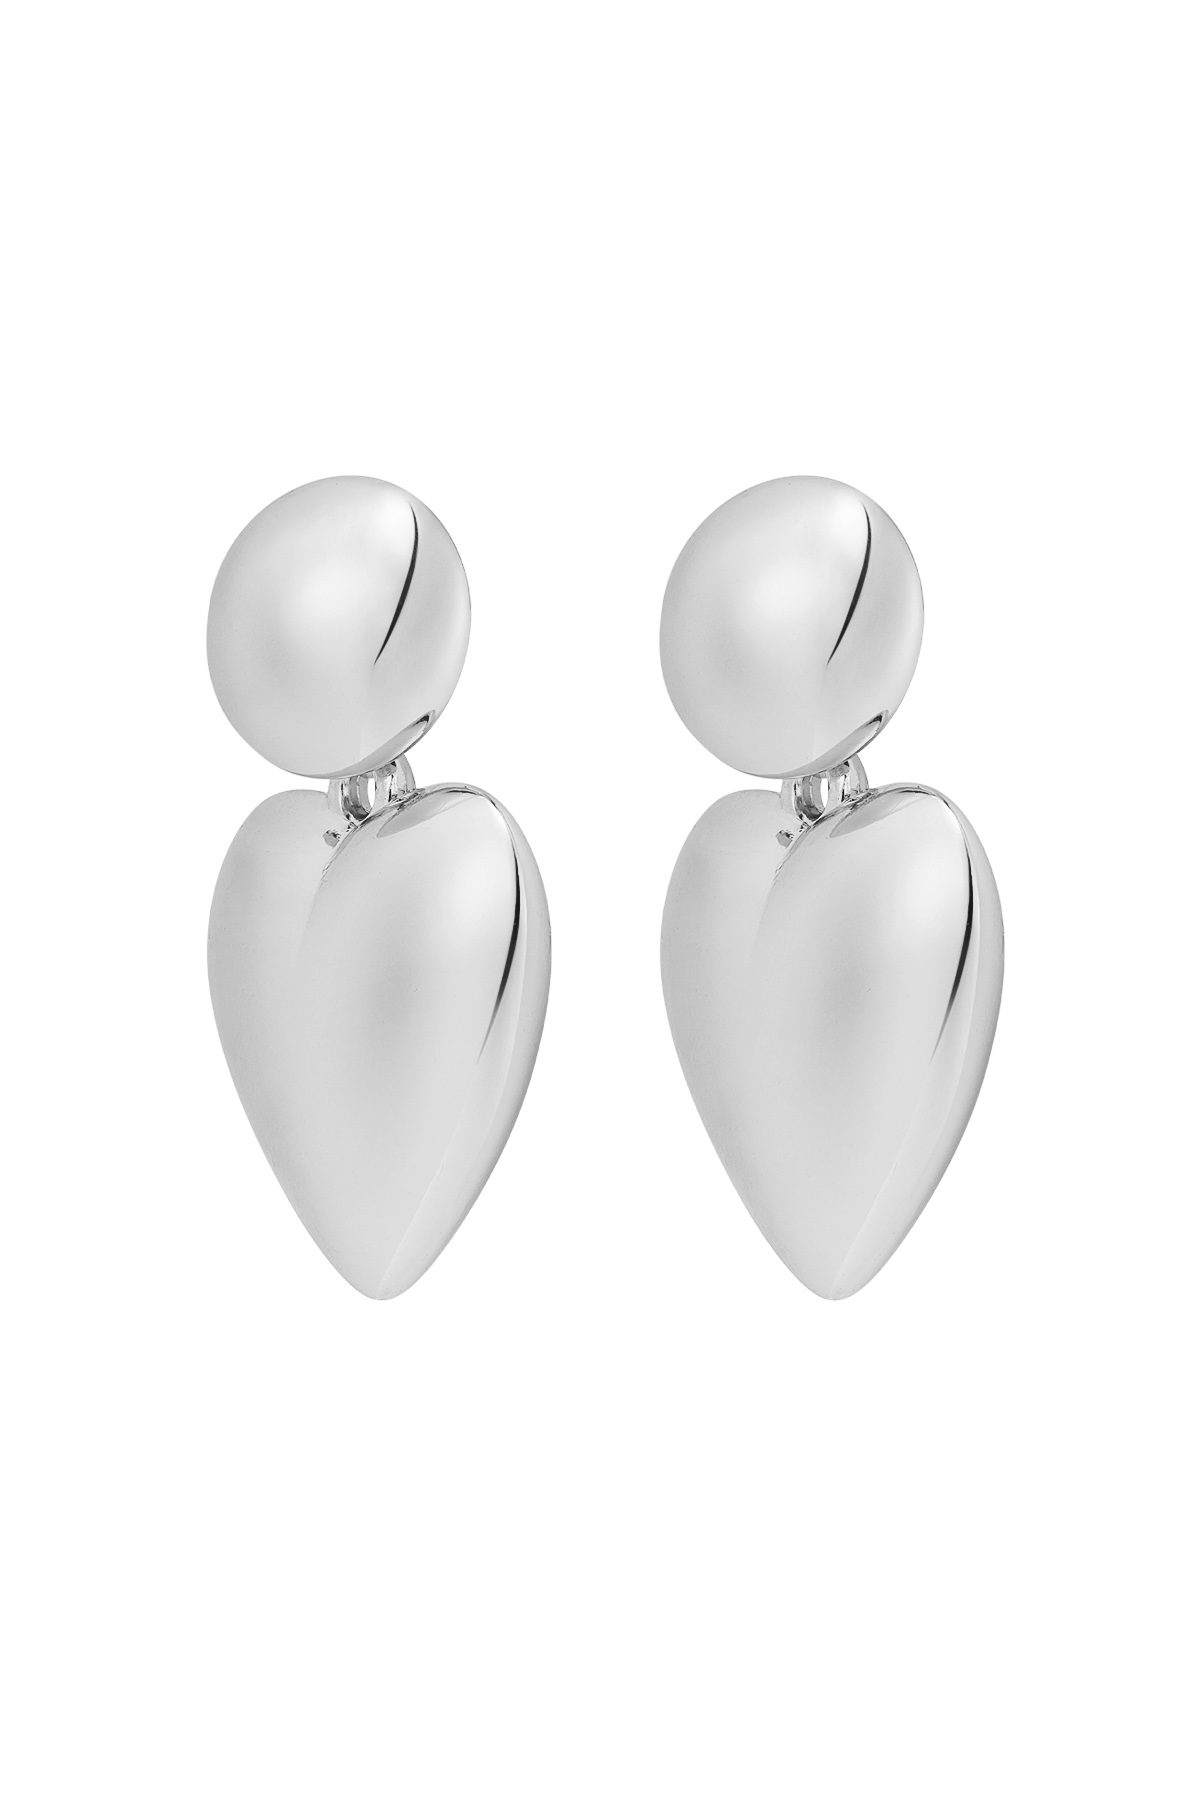 Earrings heart with dot metal - silver h5 